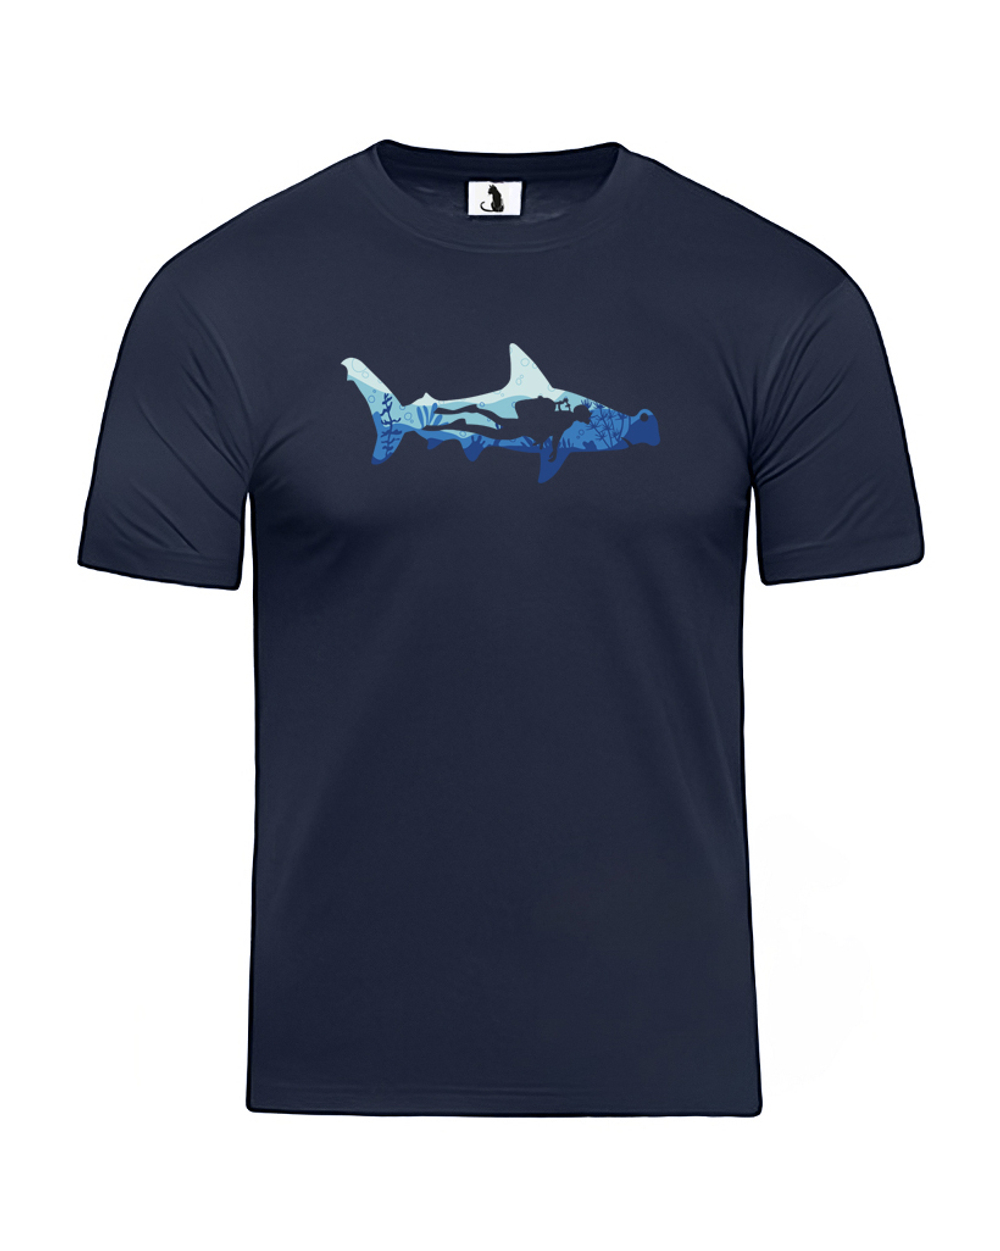 Футболка с акулой-молотом и водолазом мужская темно-синяя